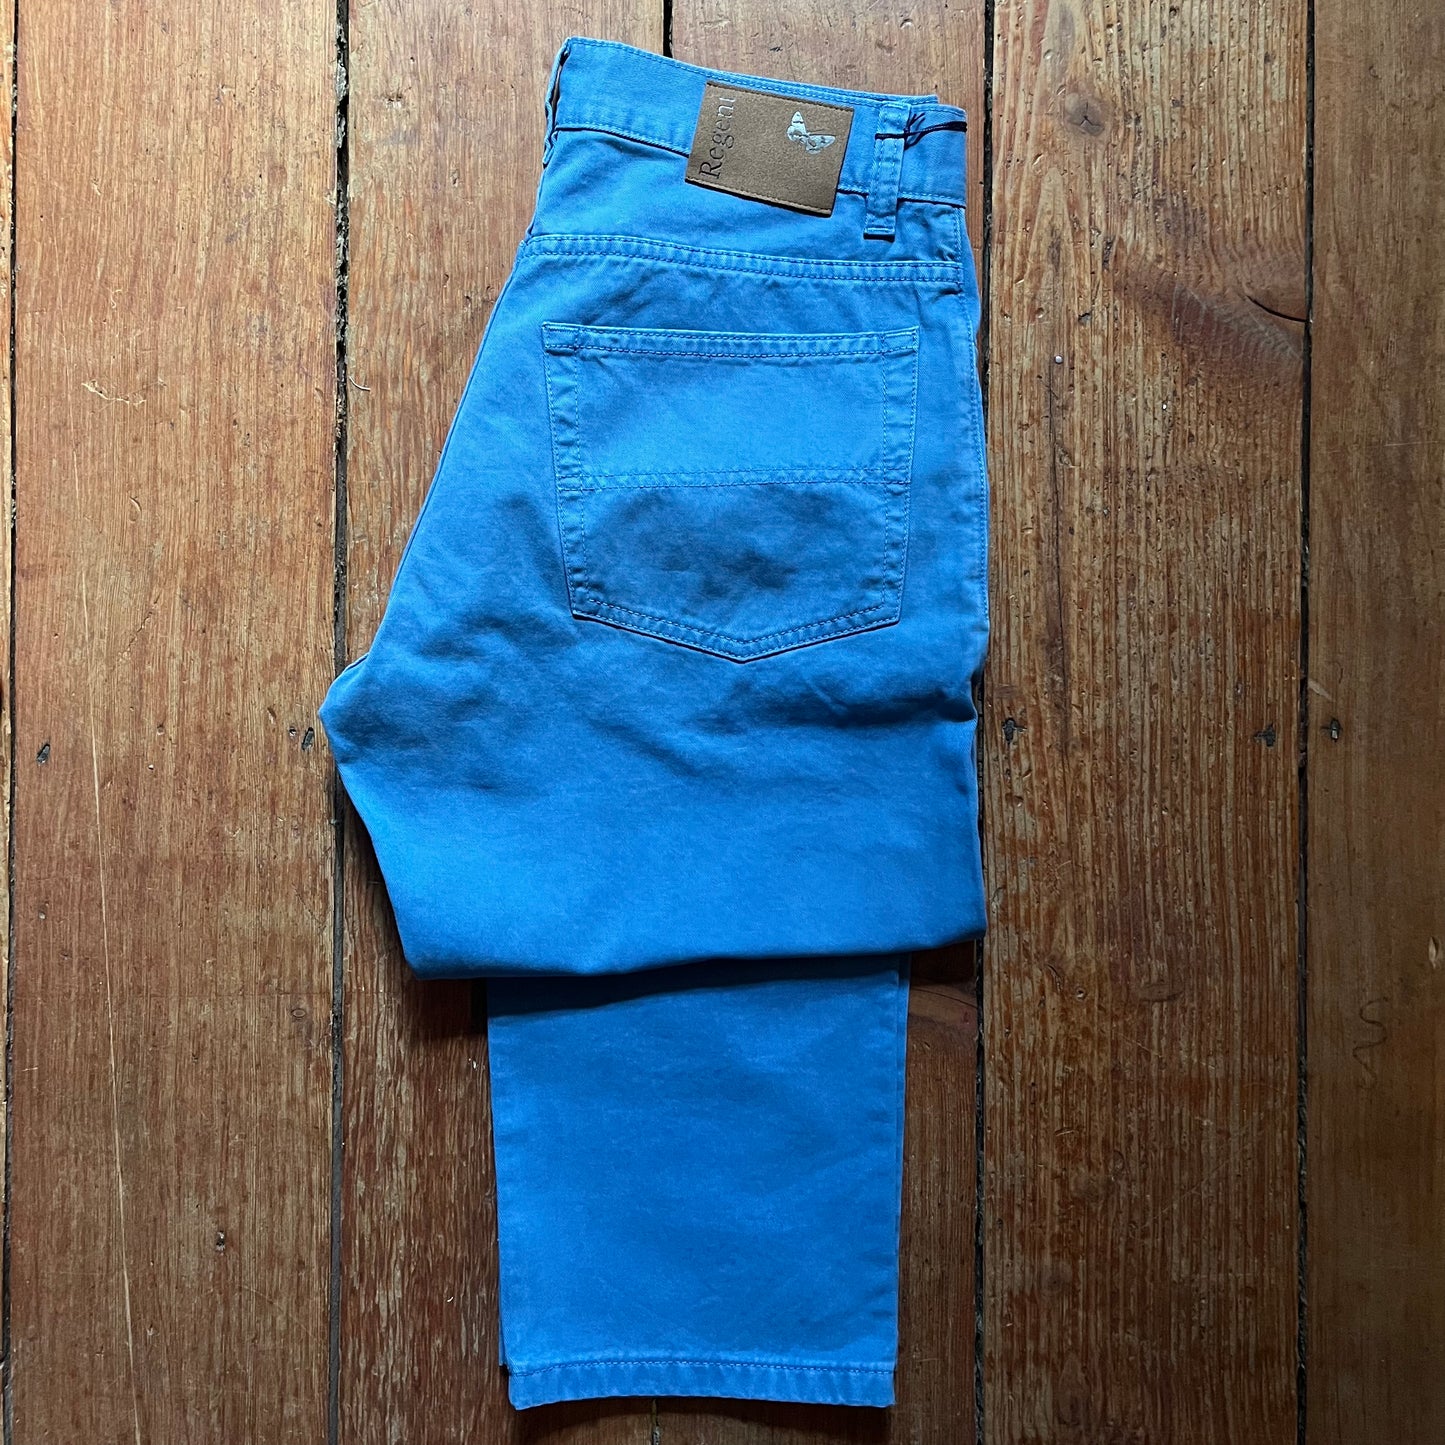 Light blue jeans, 5 pockets. belt hooks, regular fit and classic style. Leather patch on back belt.